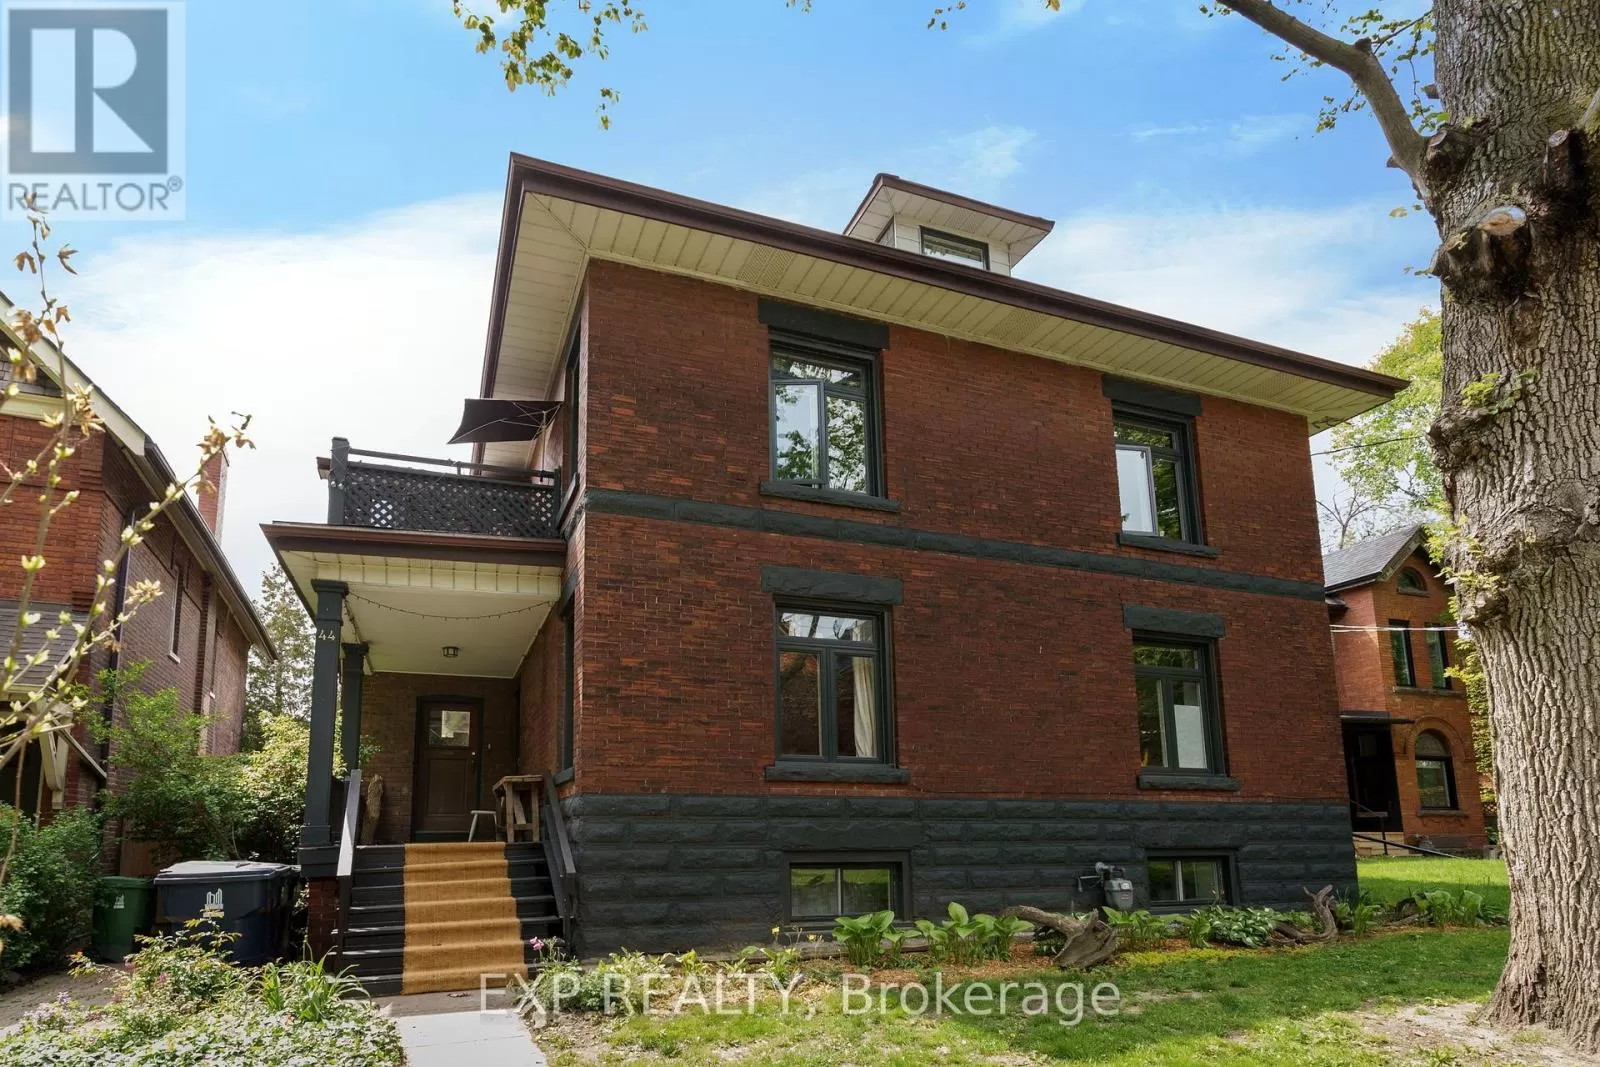 House for rent: 44 Wilson Park Road, Toronto, Ontario M6K 3B5